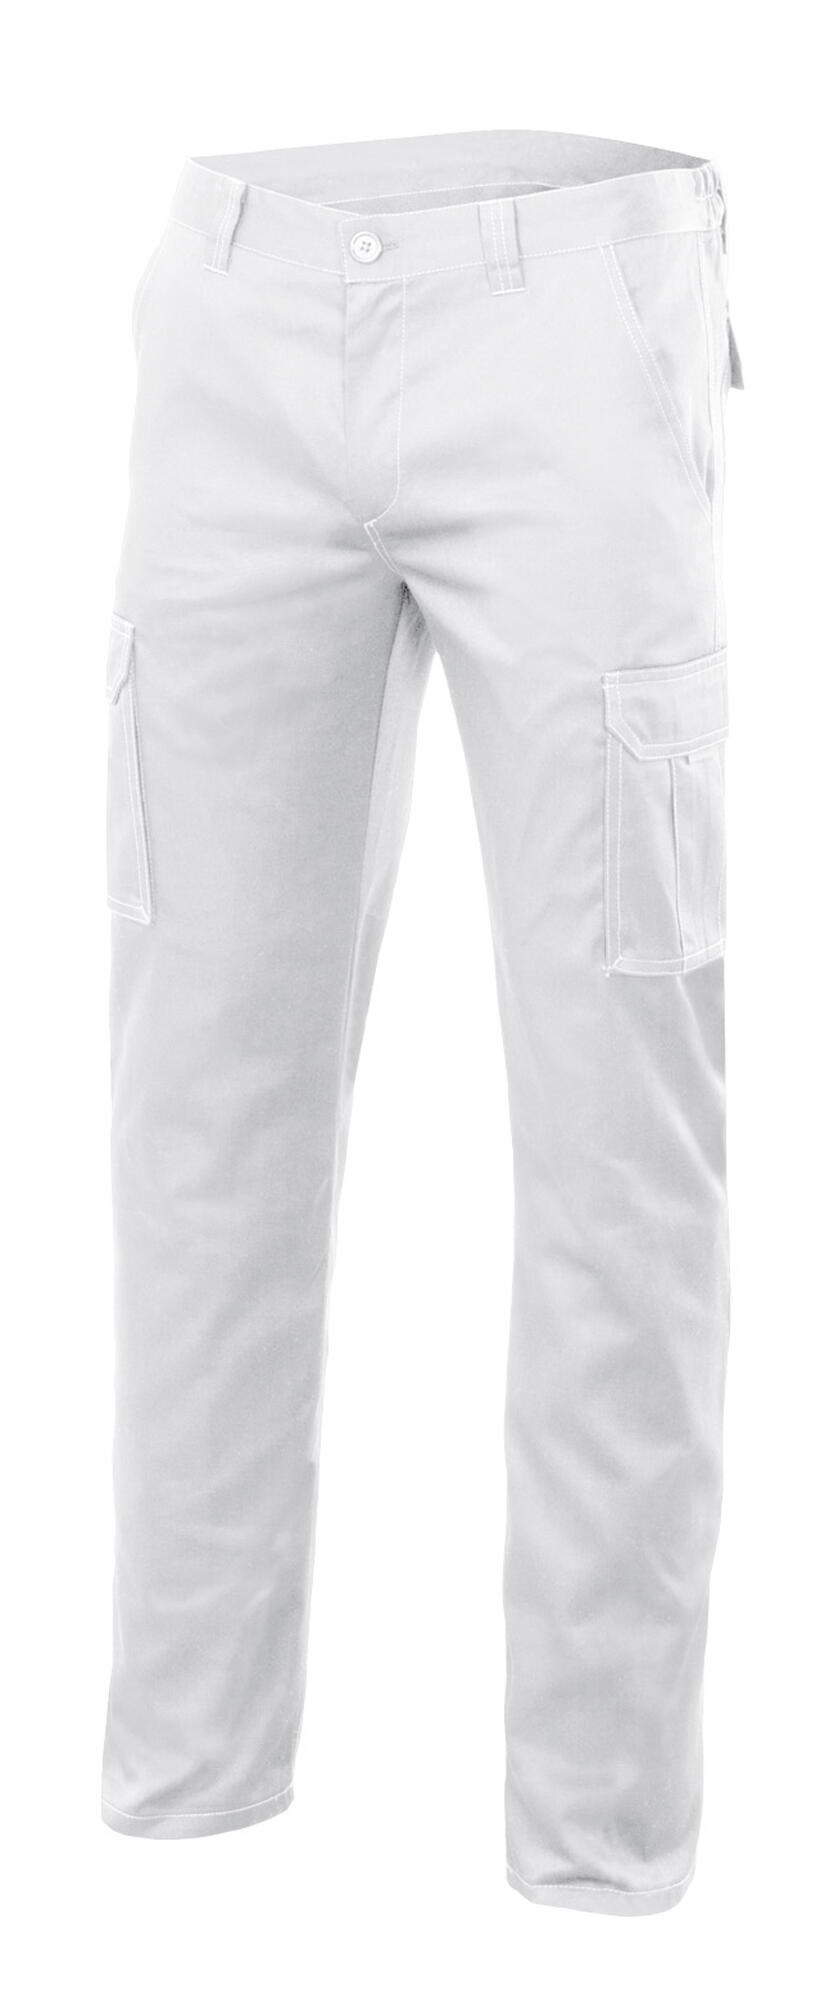 Pantalon de trabajo multibolsillo stretch blanco t34